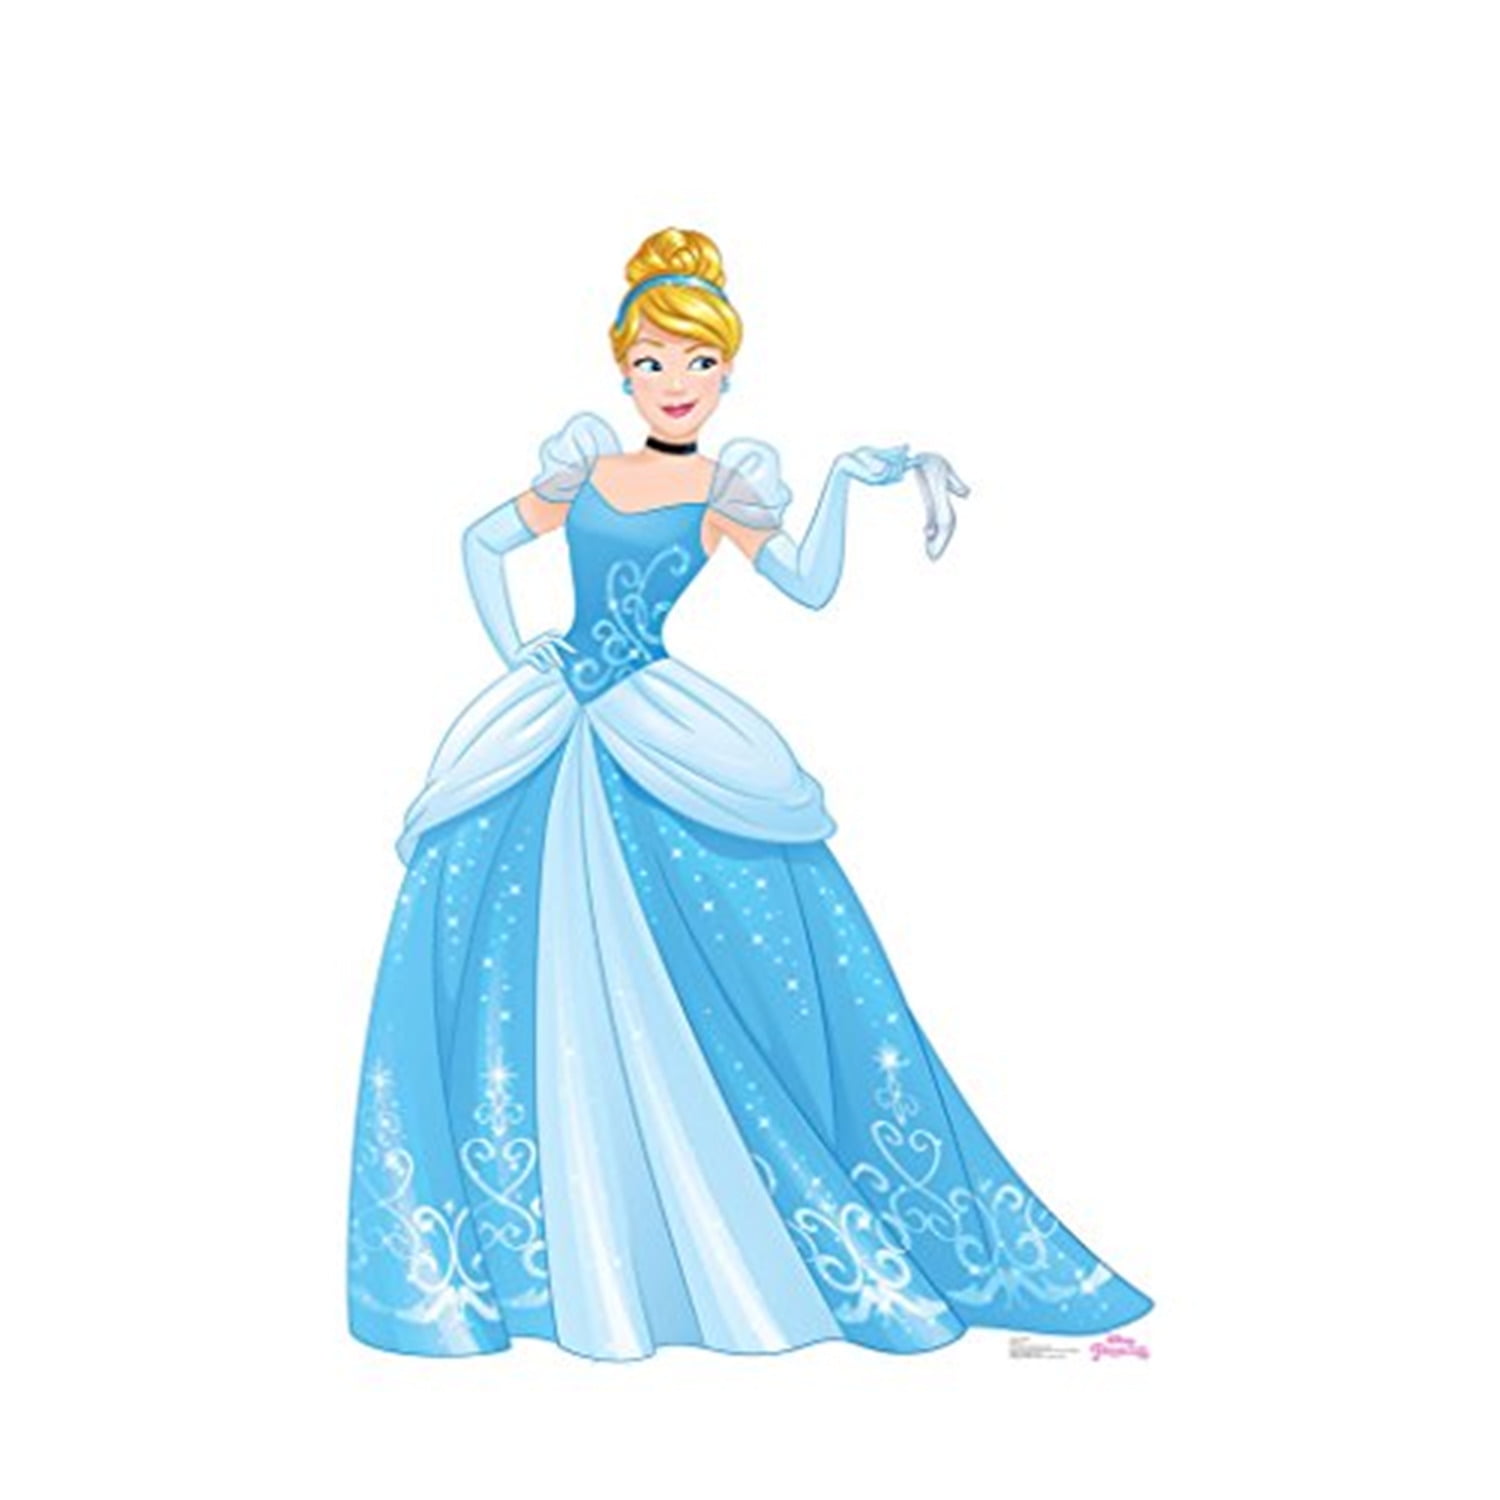 Picture of Advanced Graphics 2161 64 x 45 in. Cinderella - Disney Princess Friendship Adventures Cardboard Standup